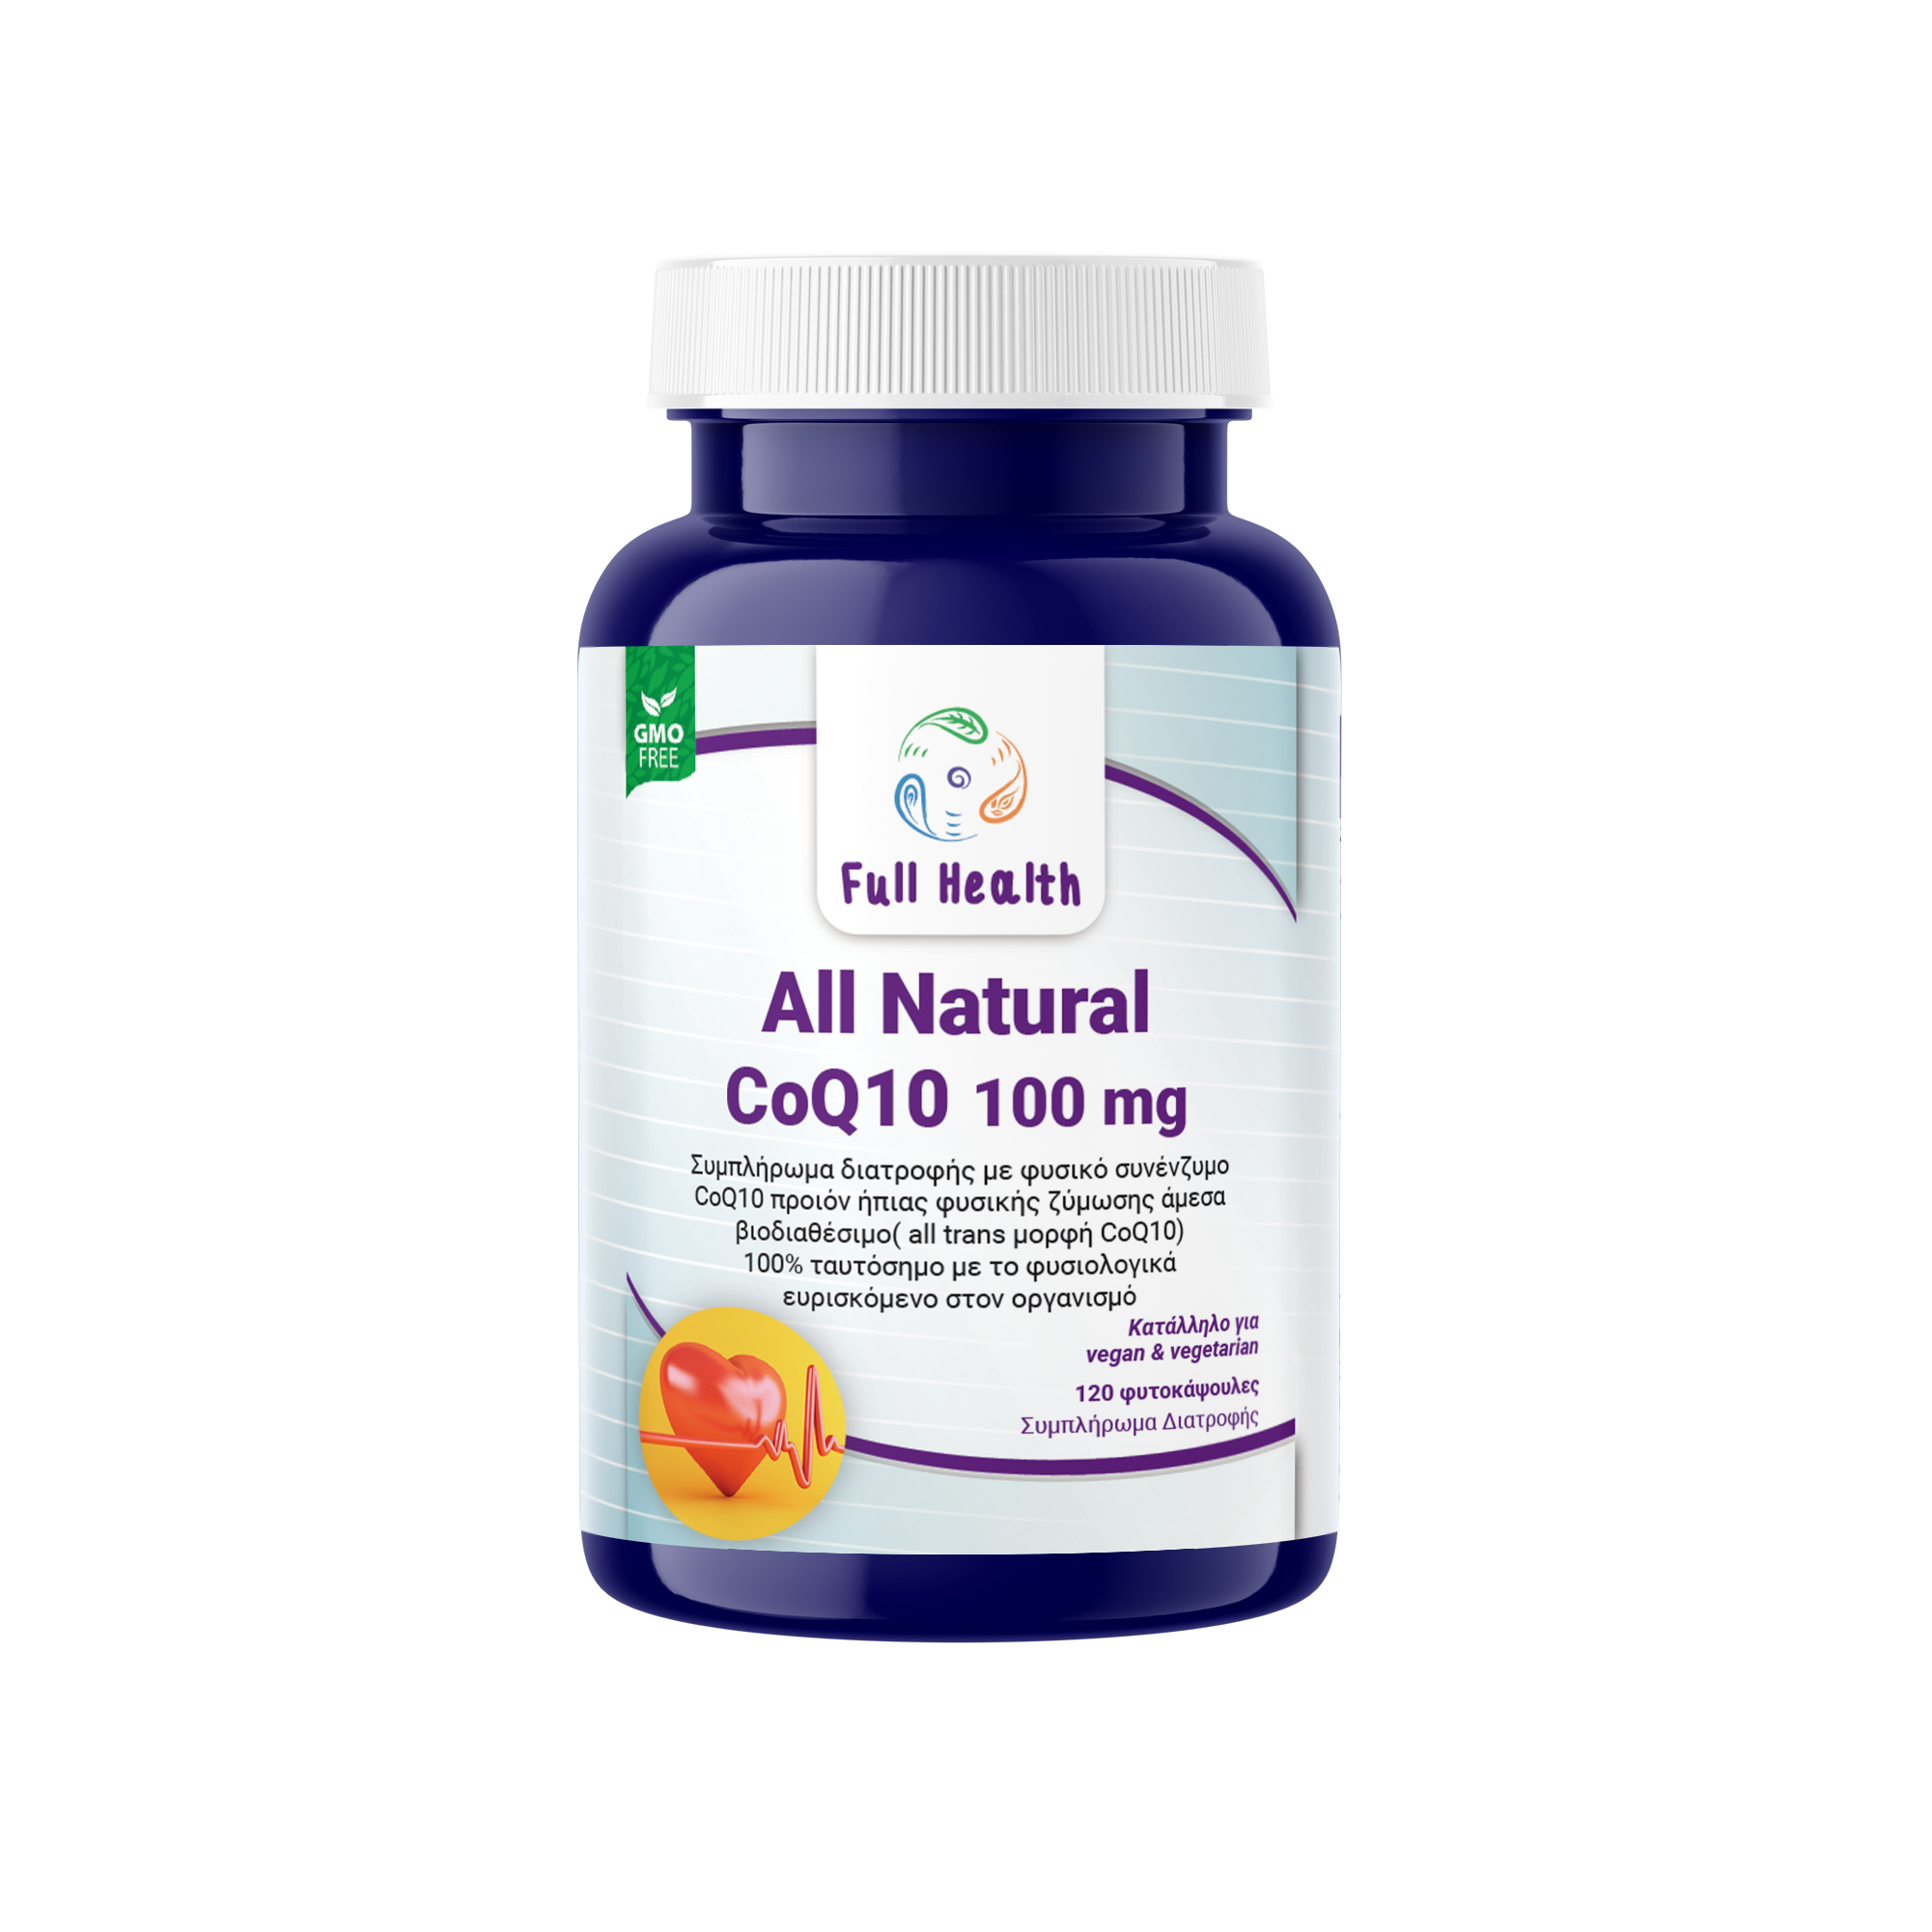  ALL Natural Coenzyme Q10 100 mg 120 caps (Συμπλήρωμα διατροφής με φυσικό συνένζυμο CoQ10, σε μορφή ALL-TRANS για υψηλή βιοδιαθεσιμότητα)